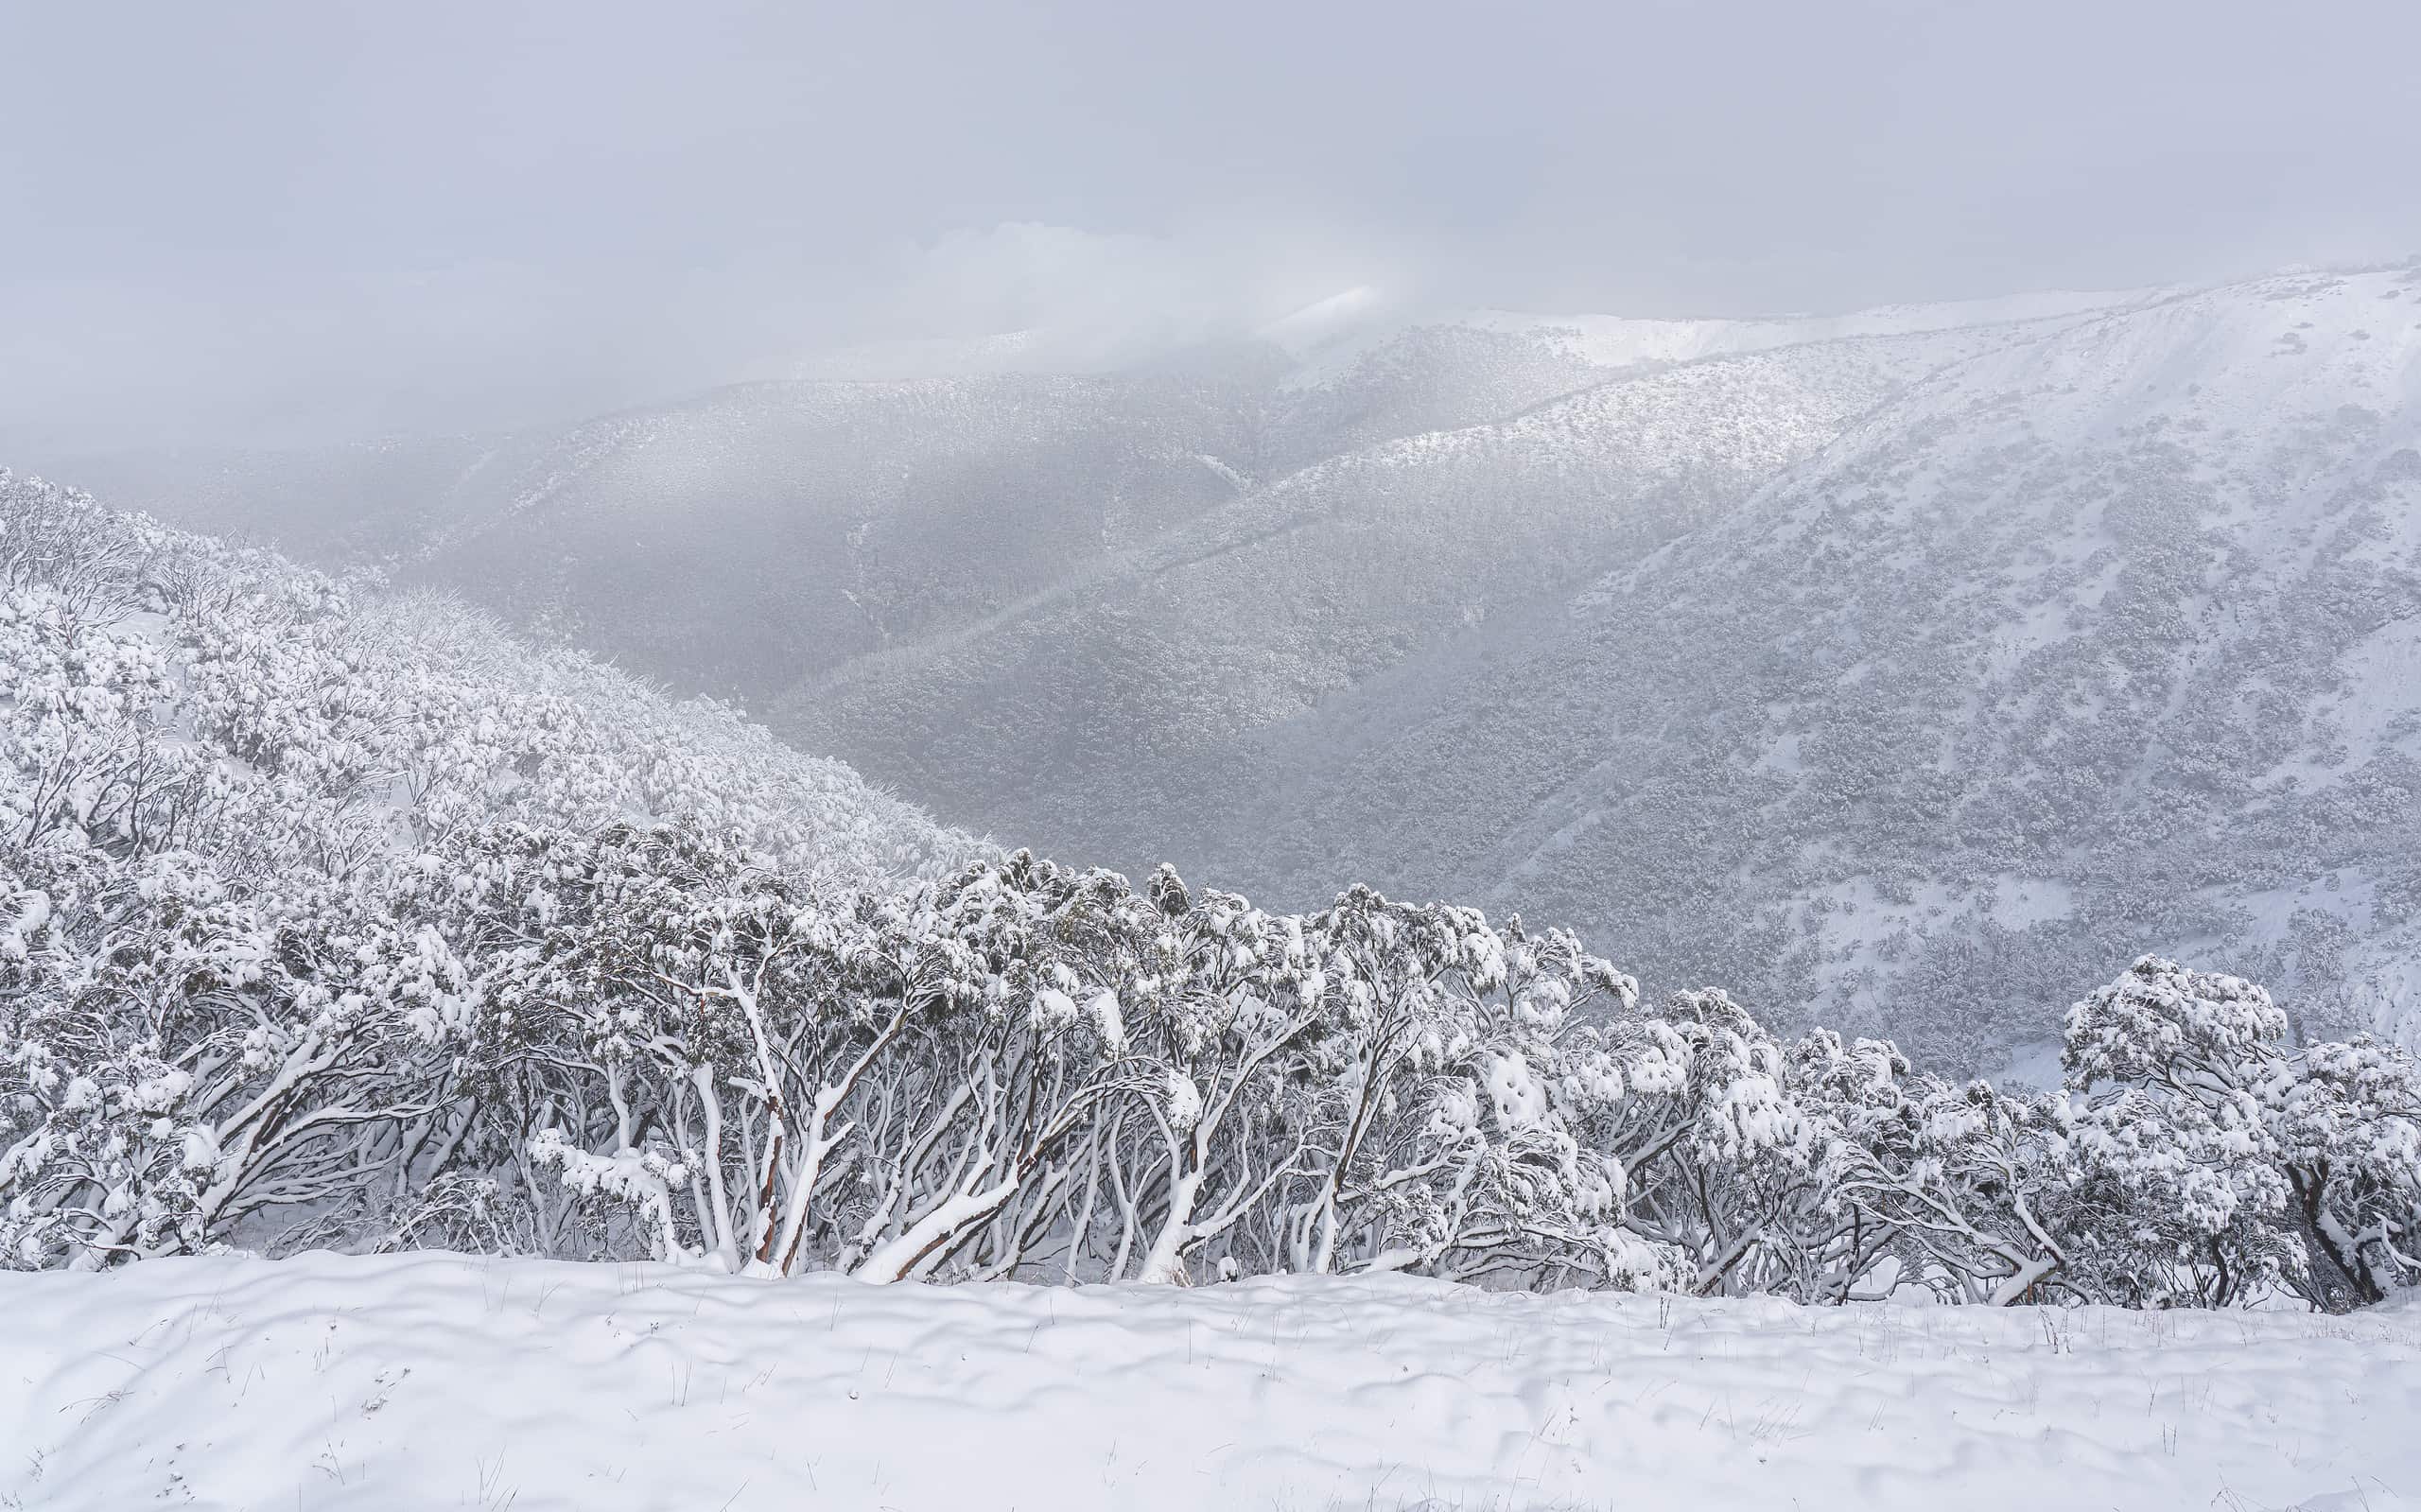 The mesmerizing snowy winter scene on Mount Hotham in Victoria, Australia